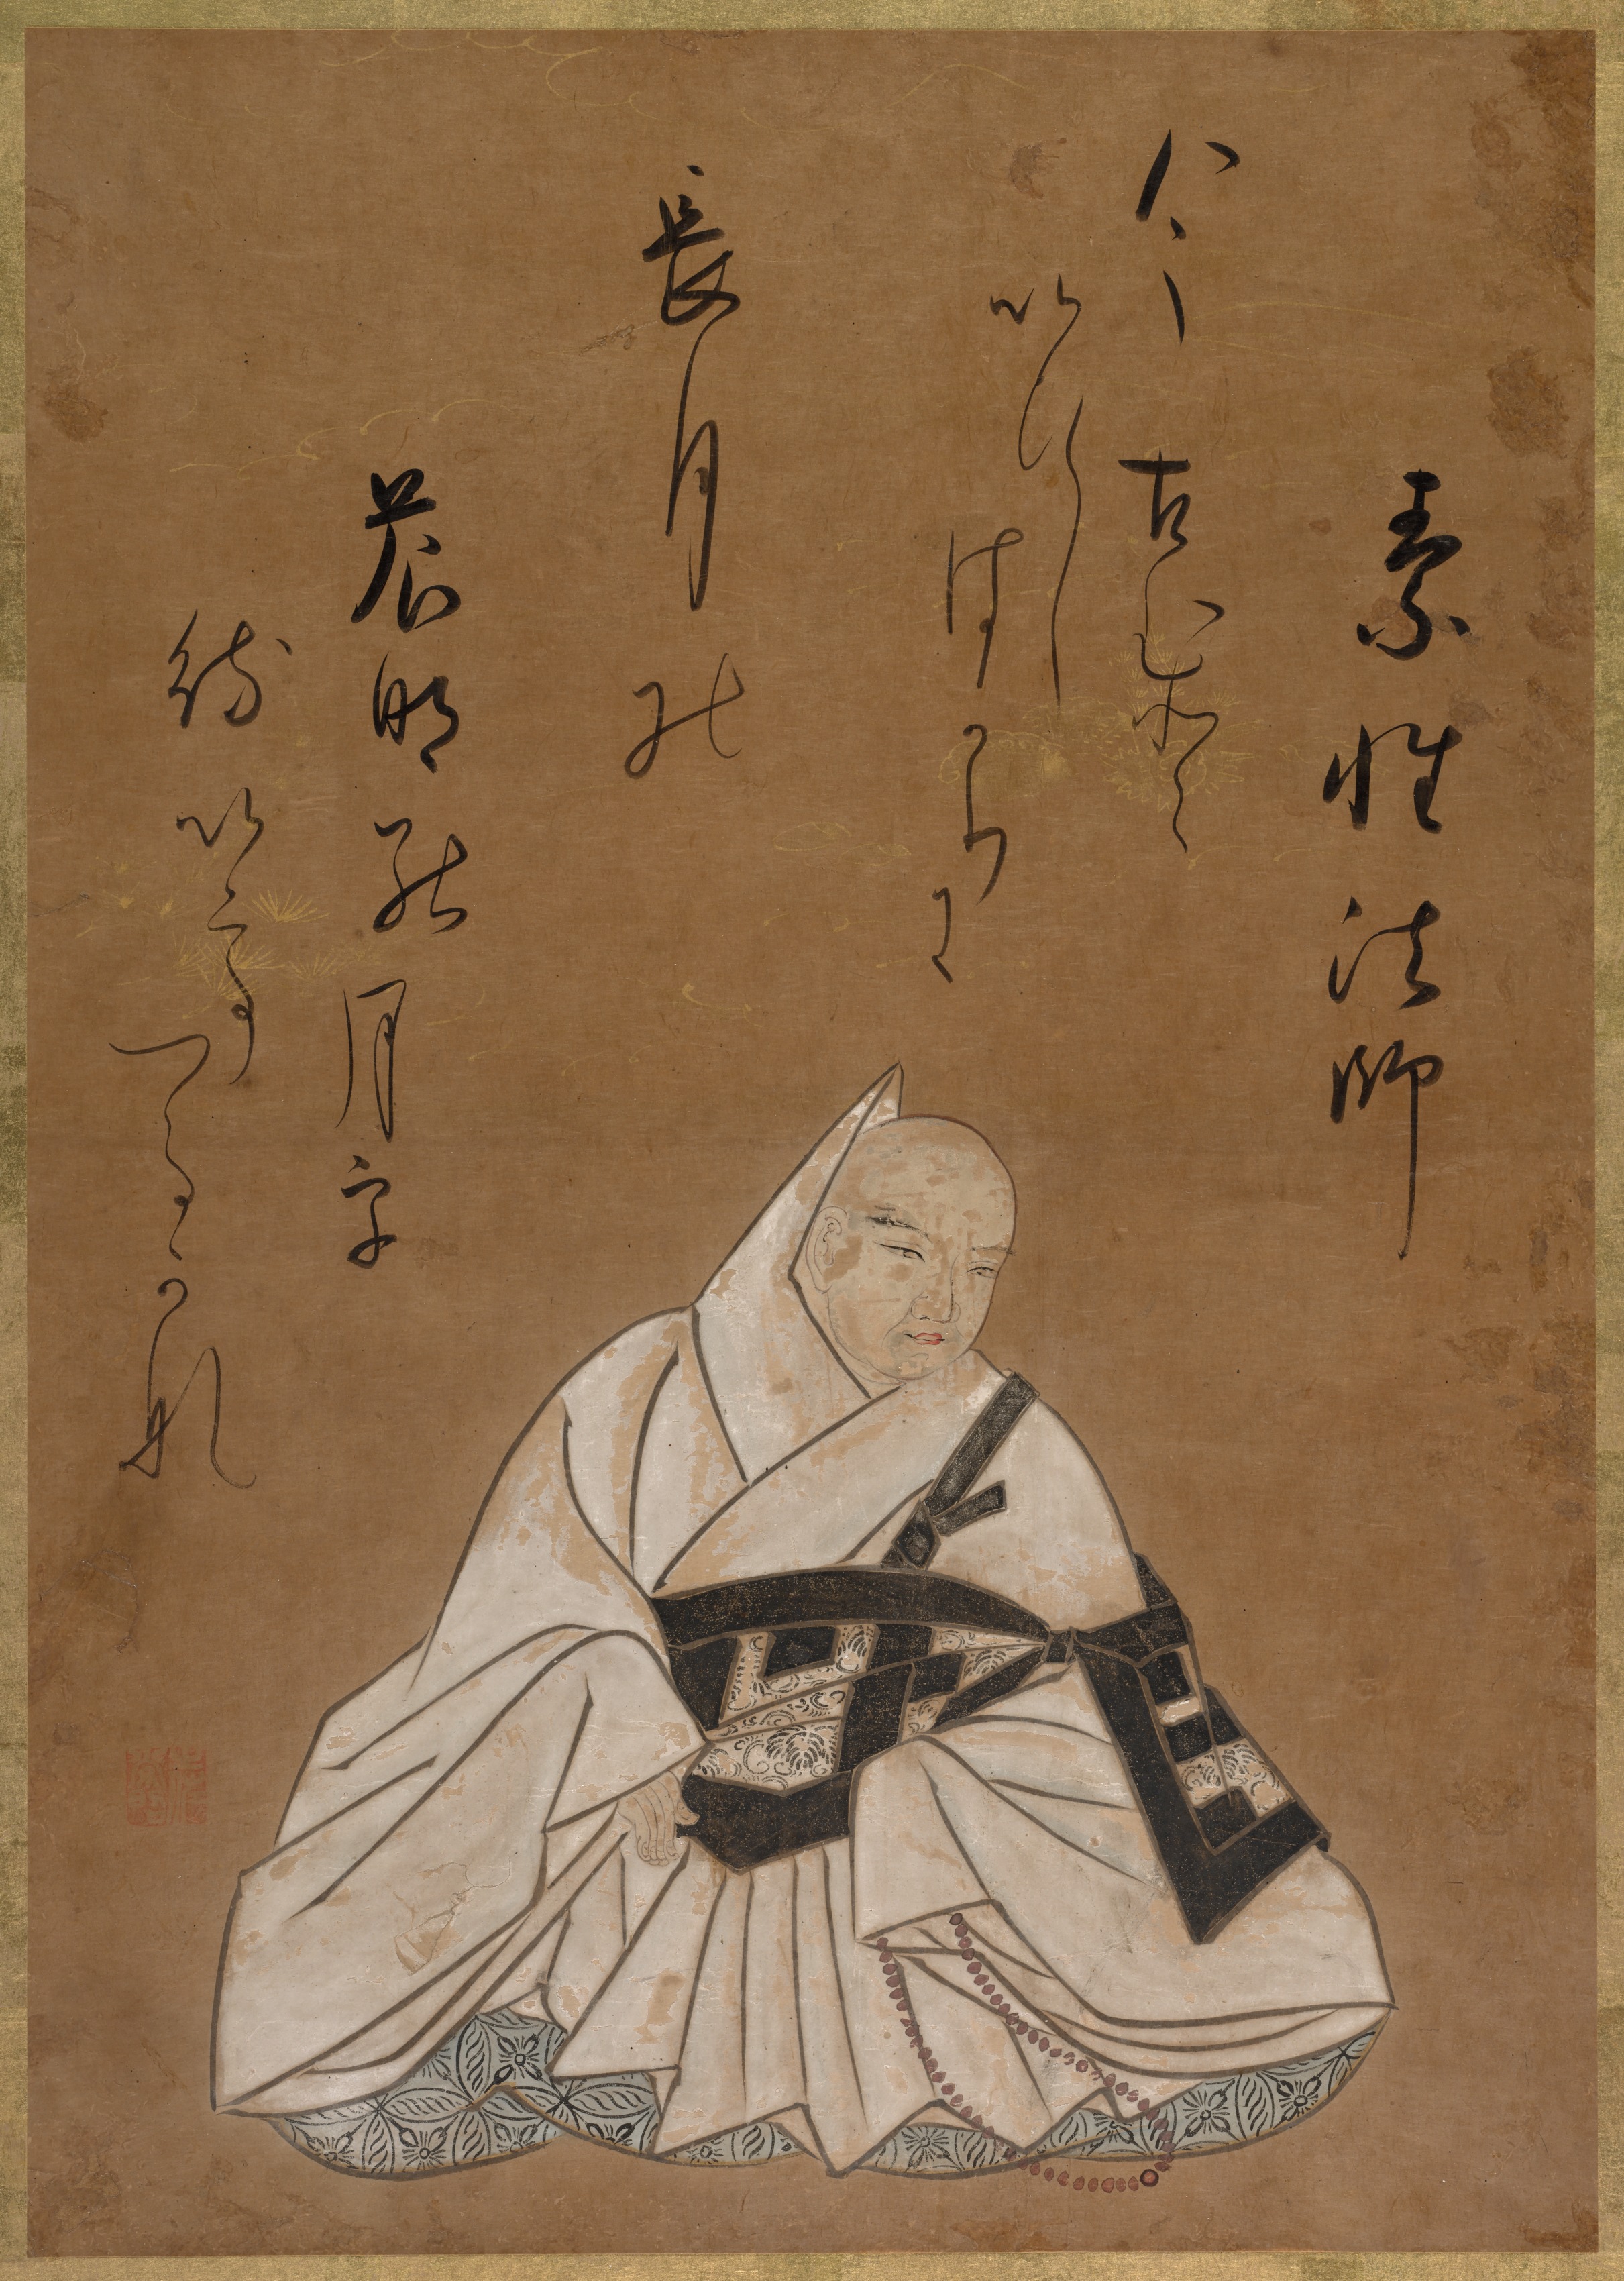 The Poet Sōsei